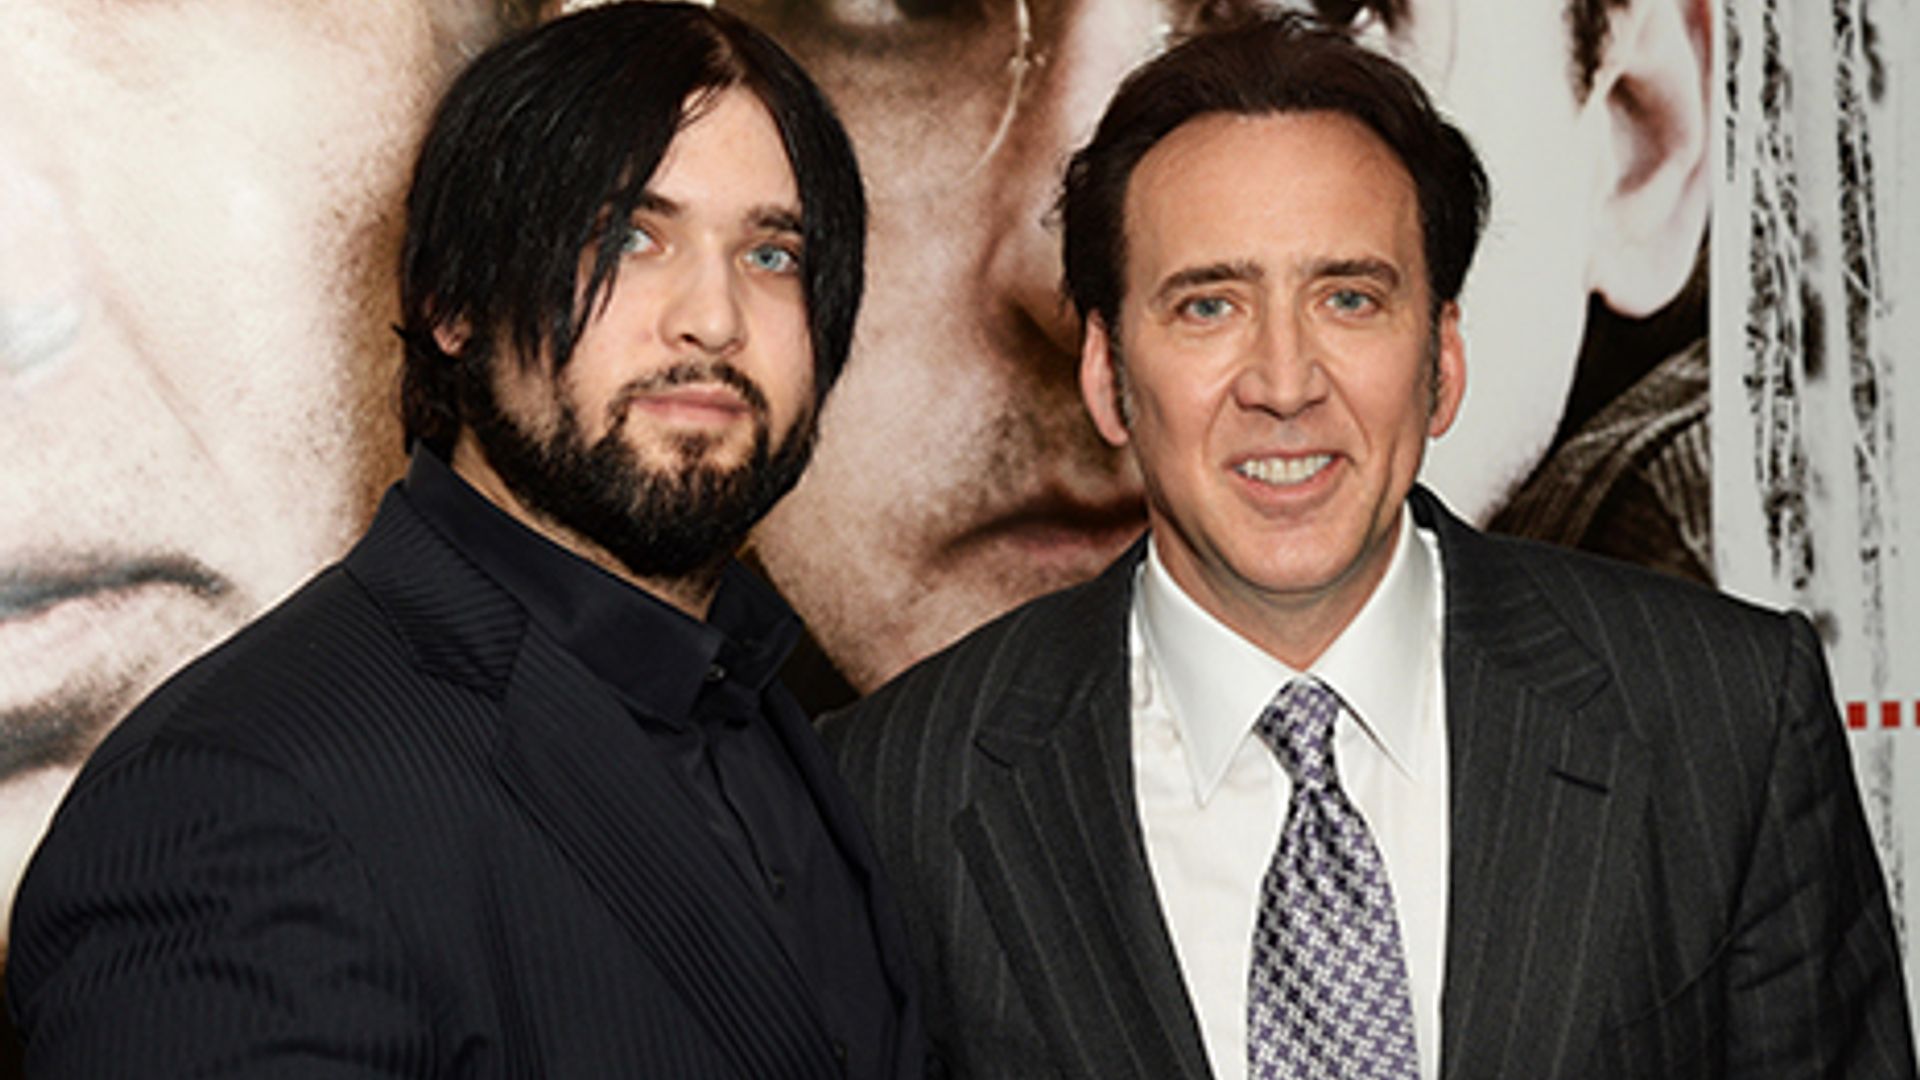 Nicolas Cage’s son Weston accused of attacking his mother Christina Fulton